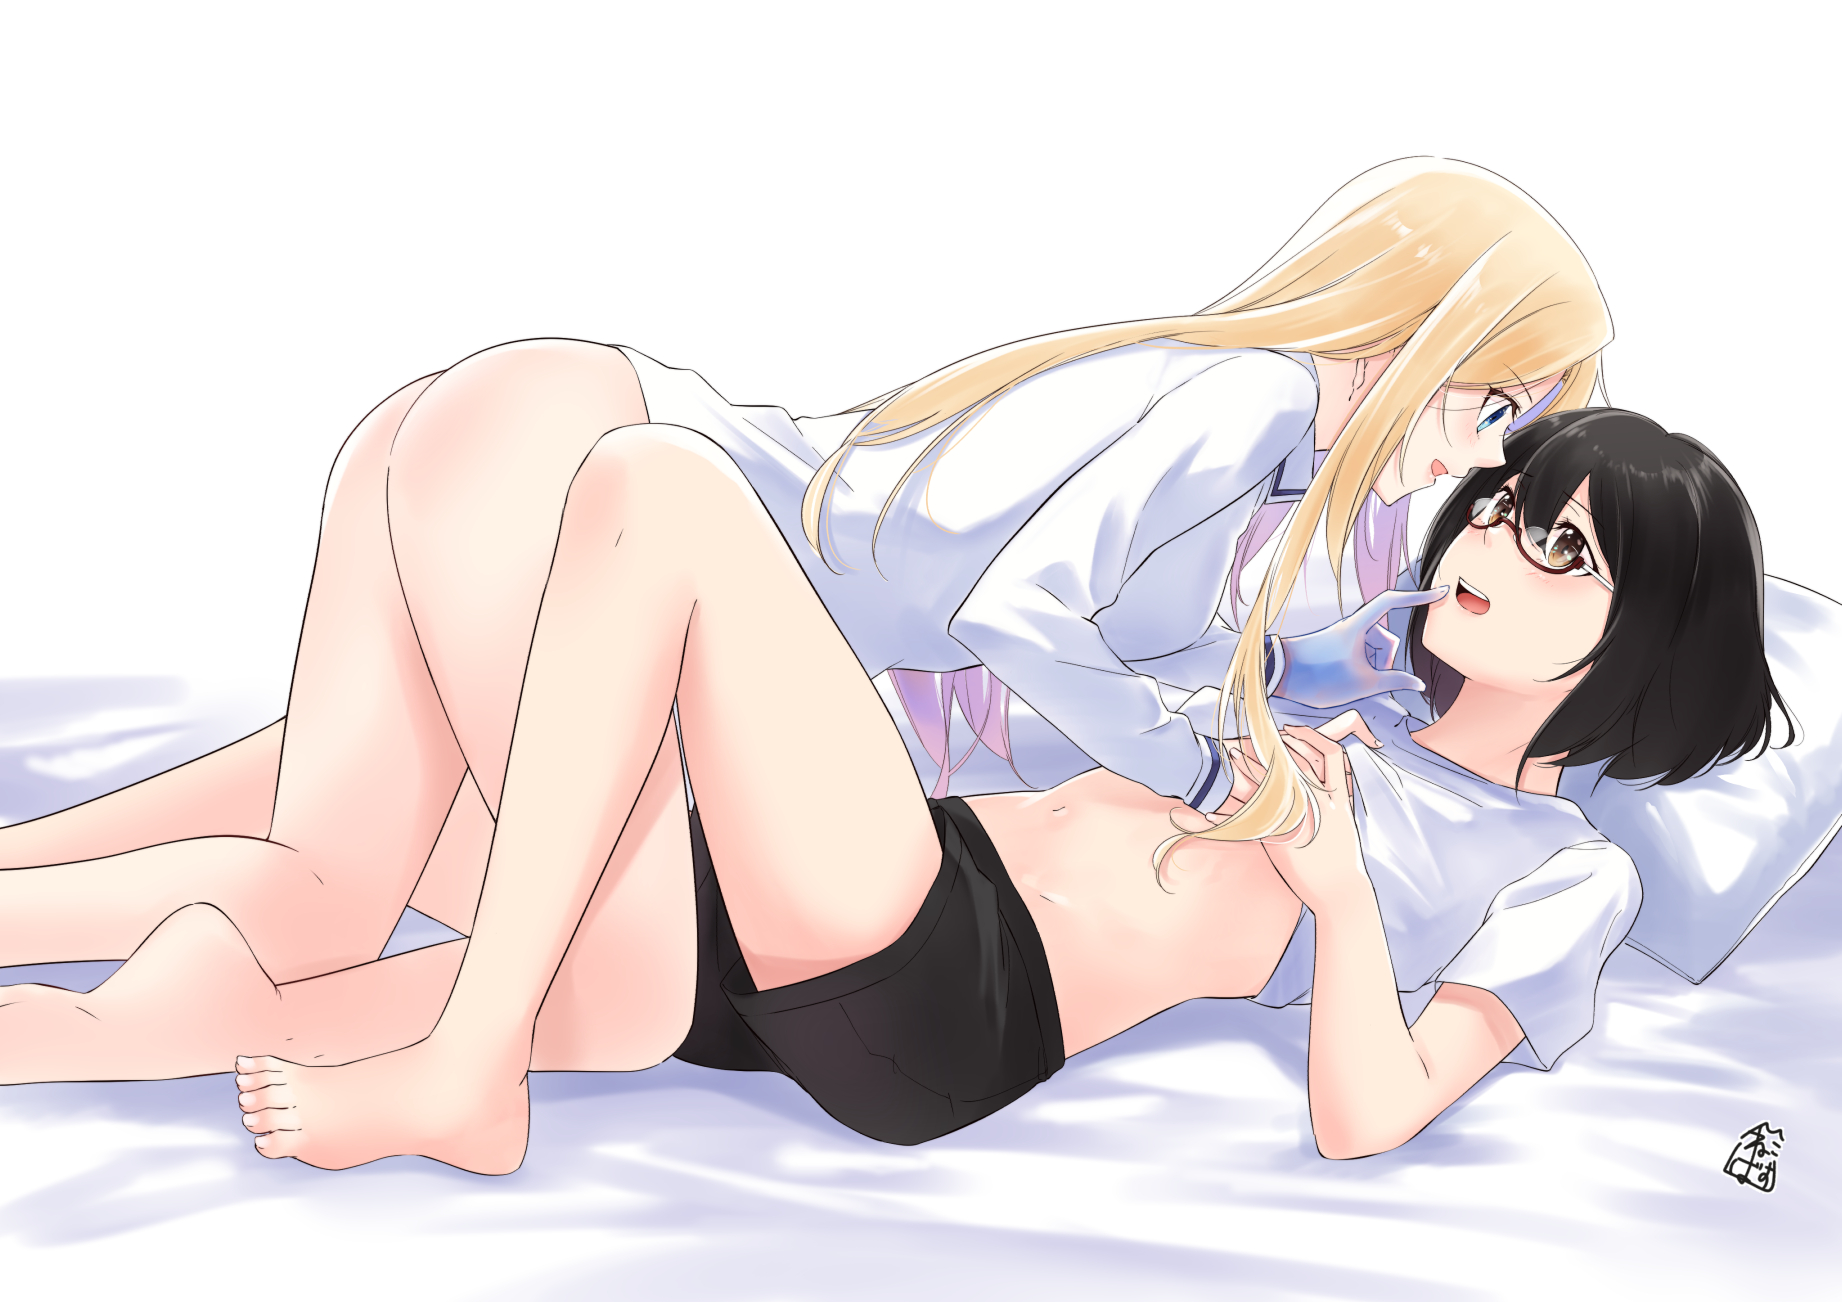 Anime 1842x1302 Otherside Picnic in bed yuri two women glasses lifting shirt lesbians anime girls ass